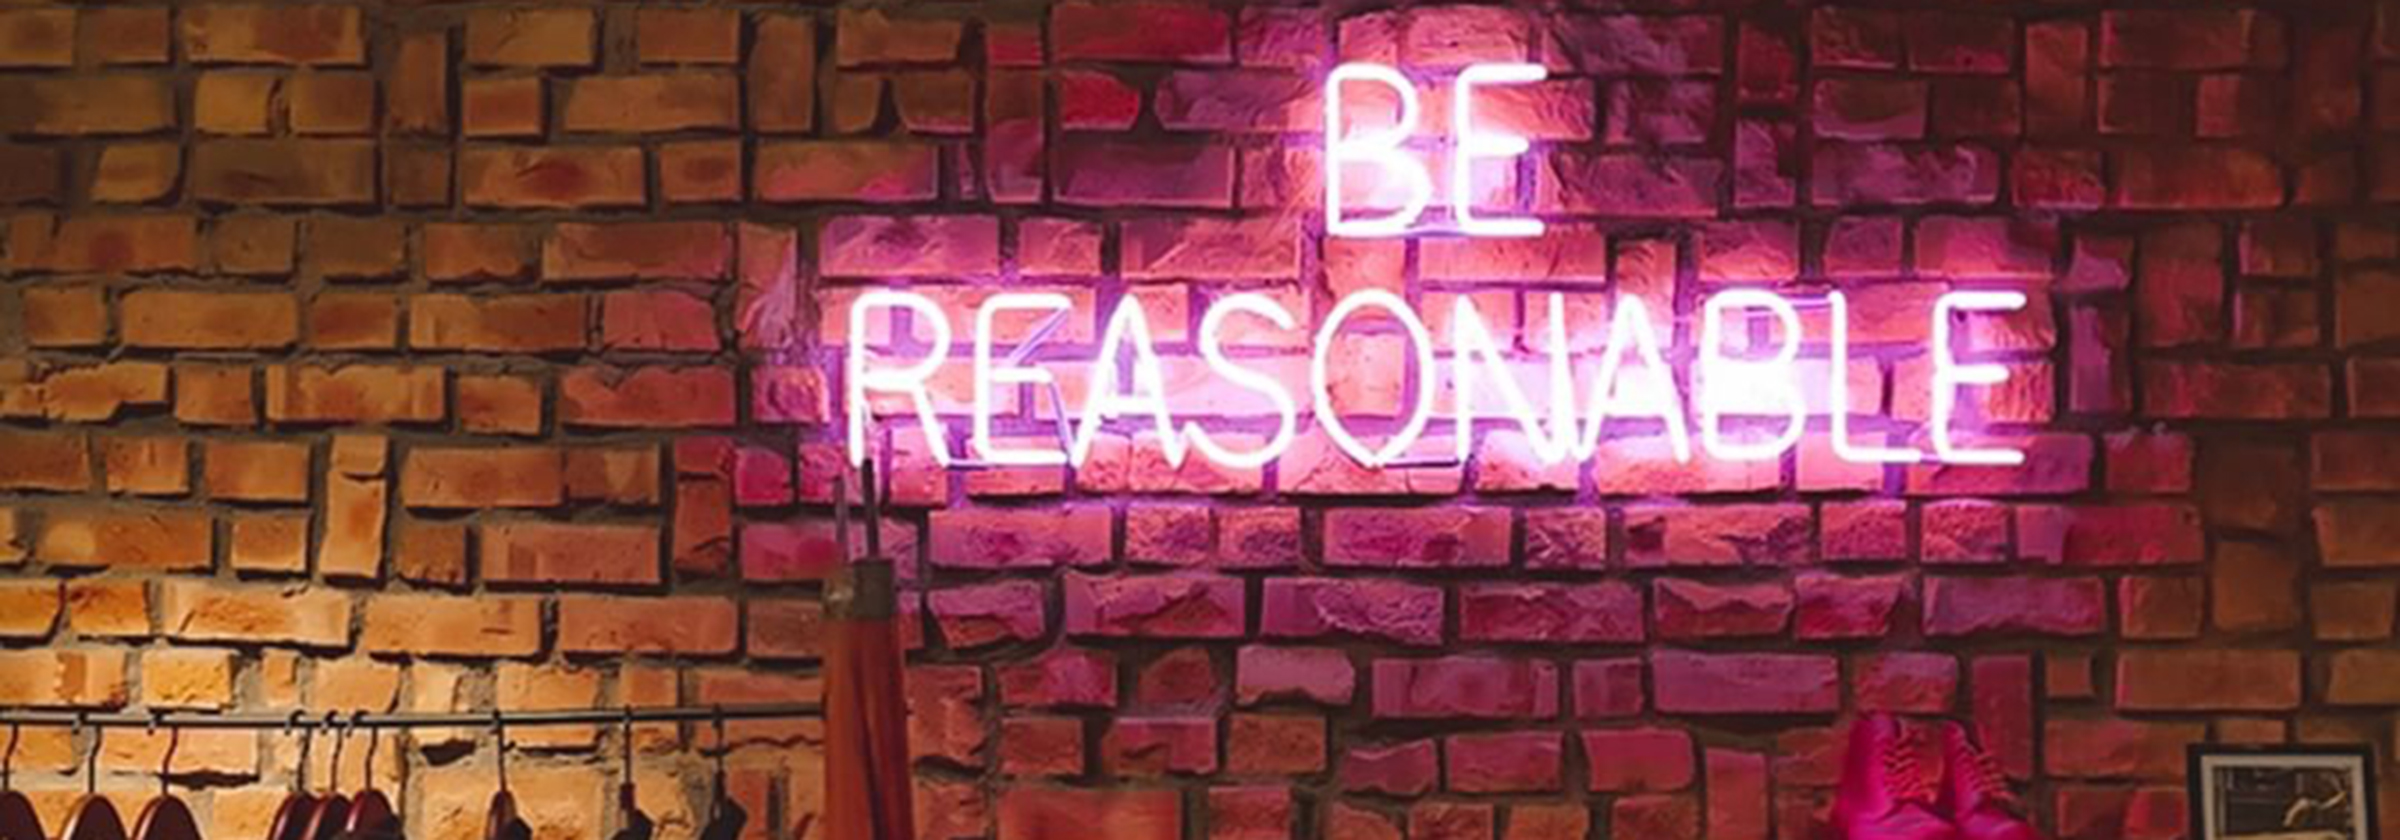 Be reasonable written in pink illuminous lights against a brick wall